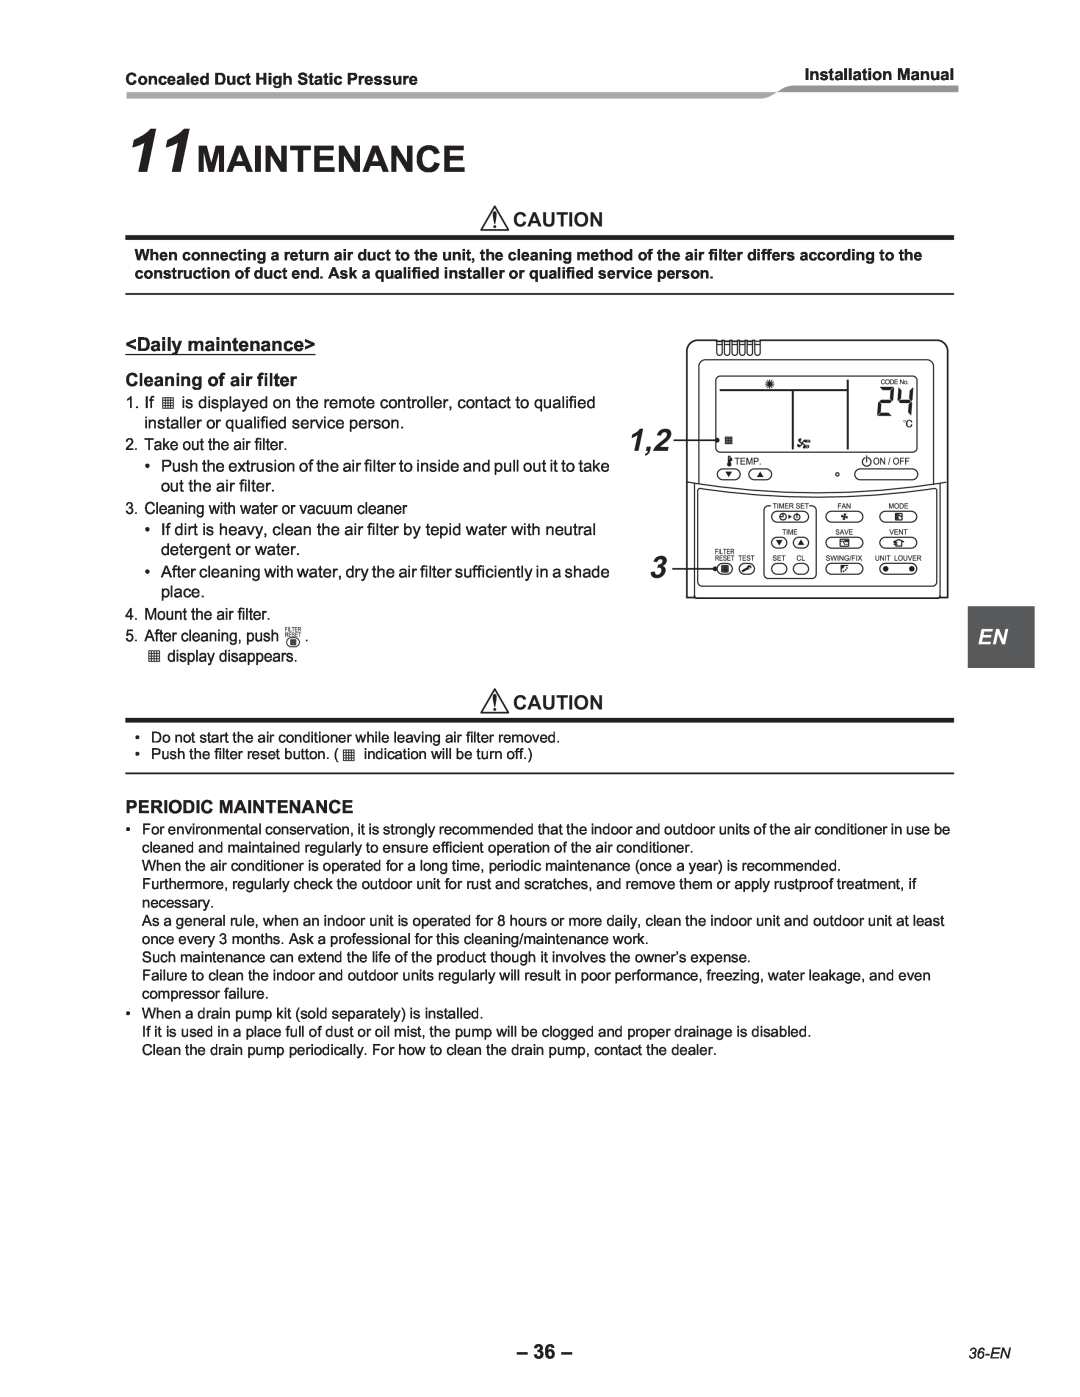 Toshiba RAV-SM2242DT-E, RAV-SM2802DT-E 11MAINTENANCE, 1,2, Daily maintenance Cleaning of air filter, Periodic Maintenance 